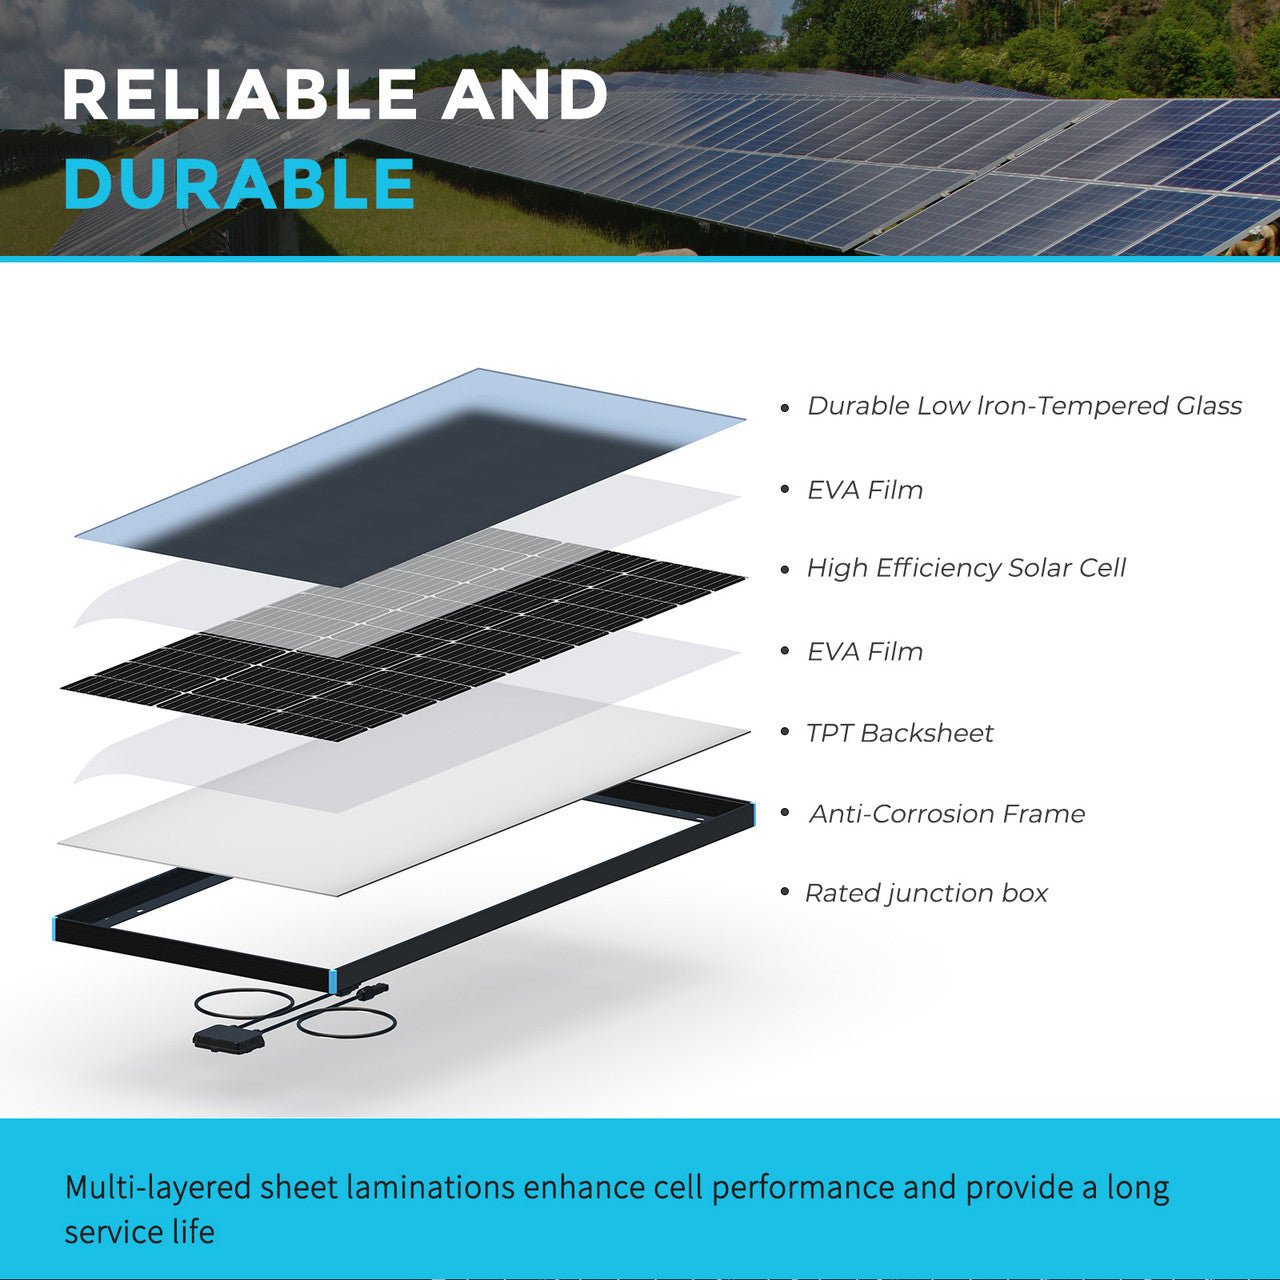 Renogy 100 Watt 12 Volt Monocrystalline Solar Panel - Solar Generators and Power Stations Plus